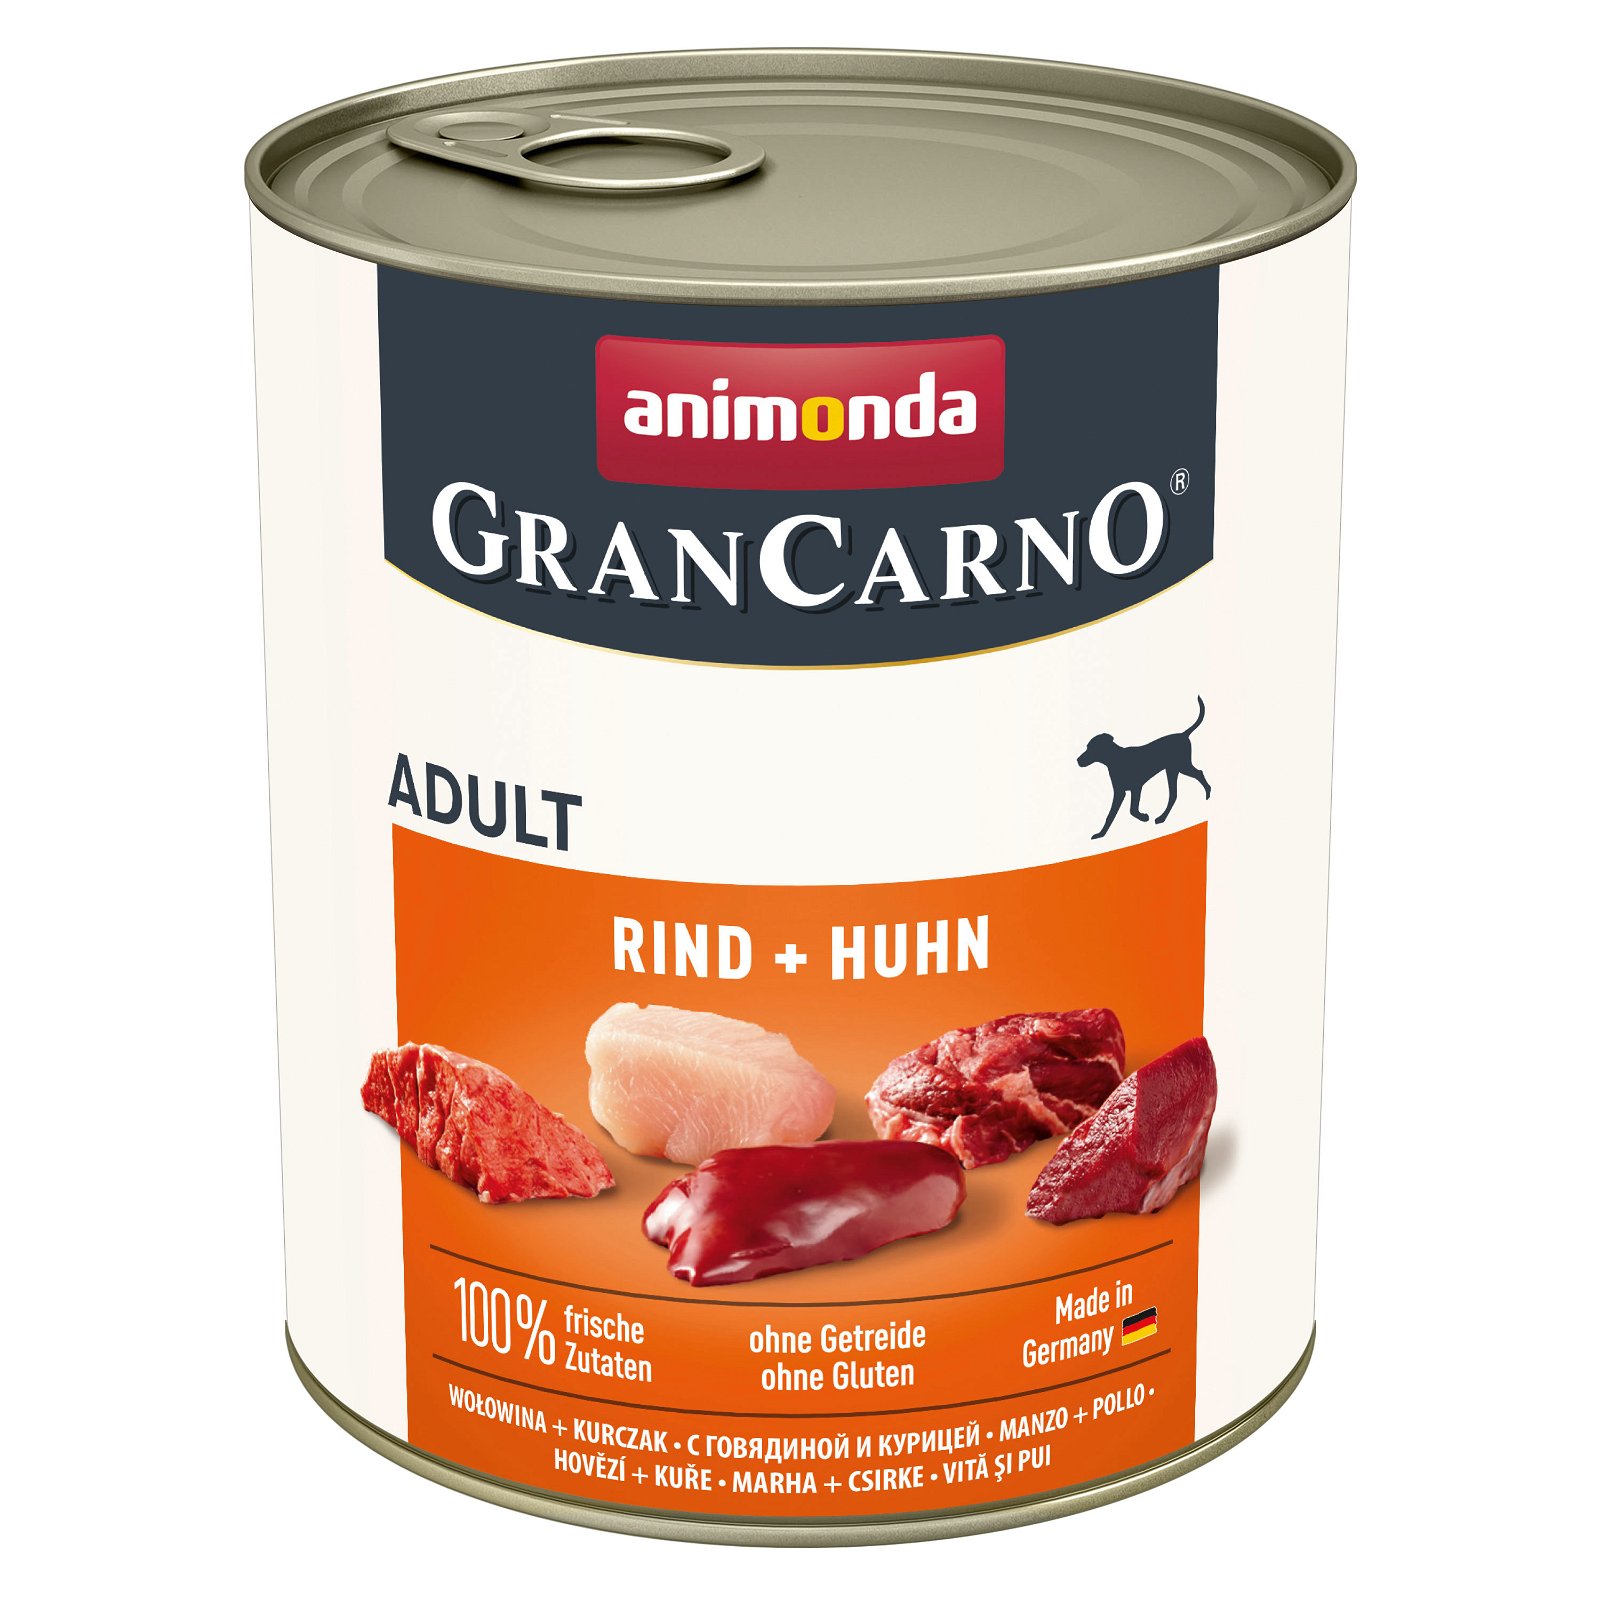 Hundefutter 'Animonda Cran Carno ® Adult', Rind & Huhn